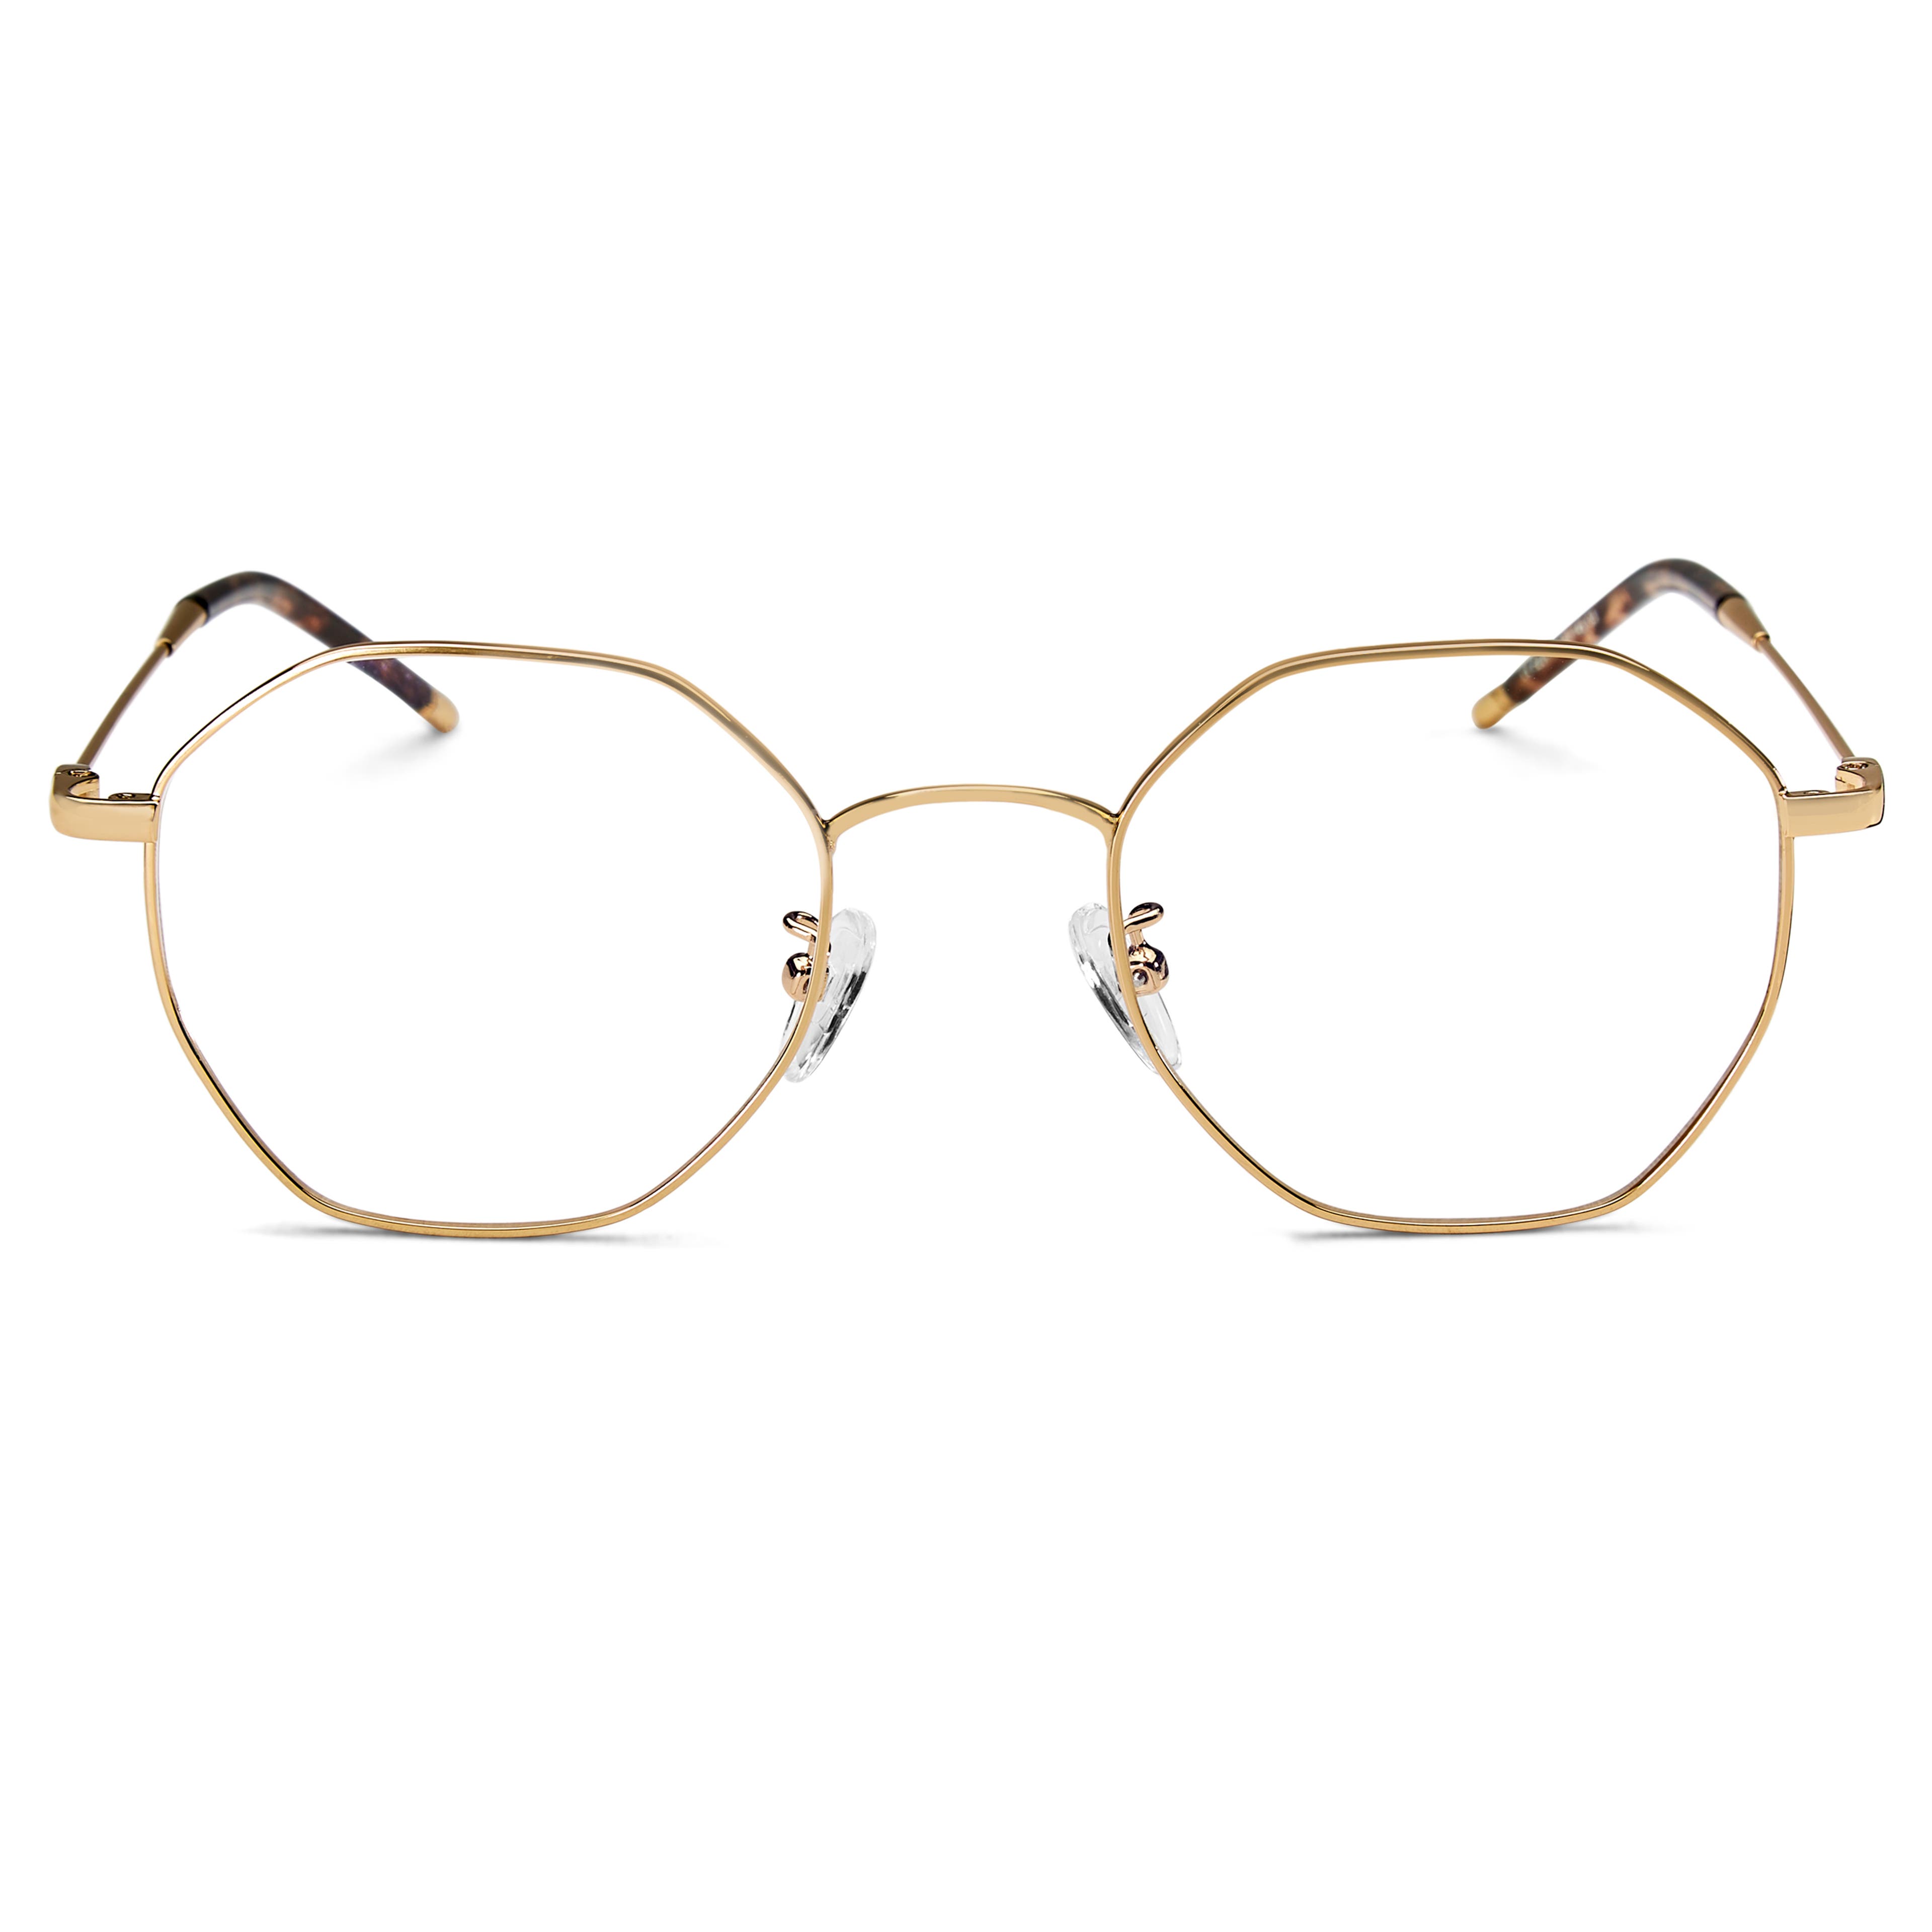 Executive Gold-Tone Geometric Frame Clear Lens Glasses